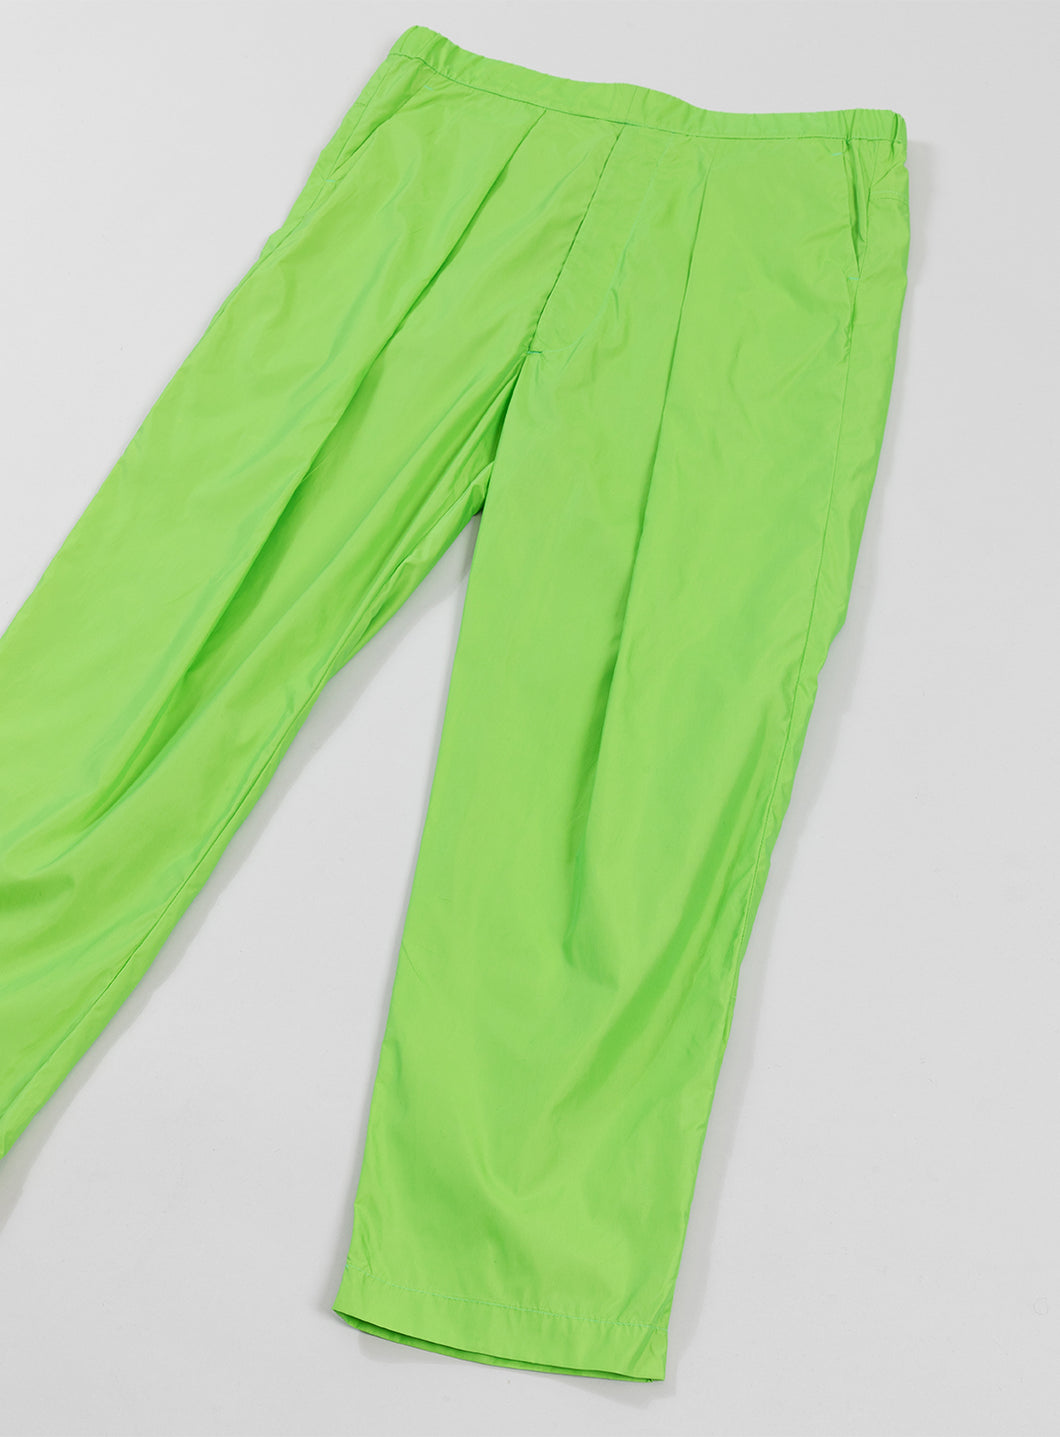 Elastic Waist Pants with Deep Pleats in Lime Green Nylon